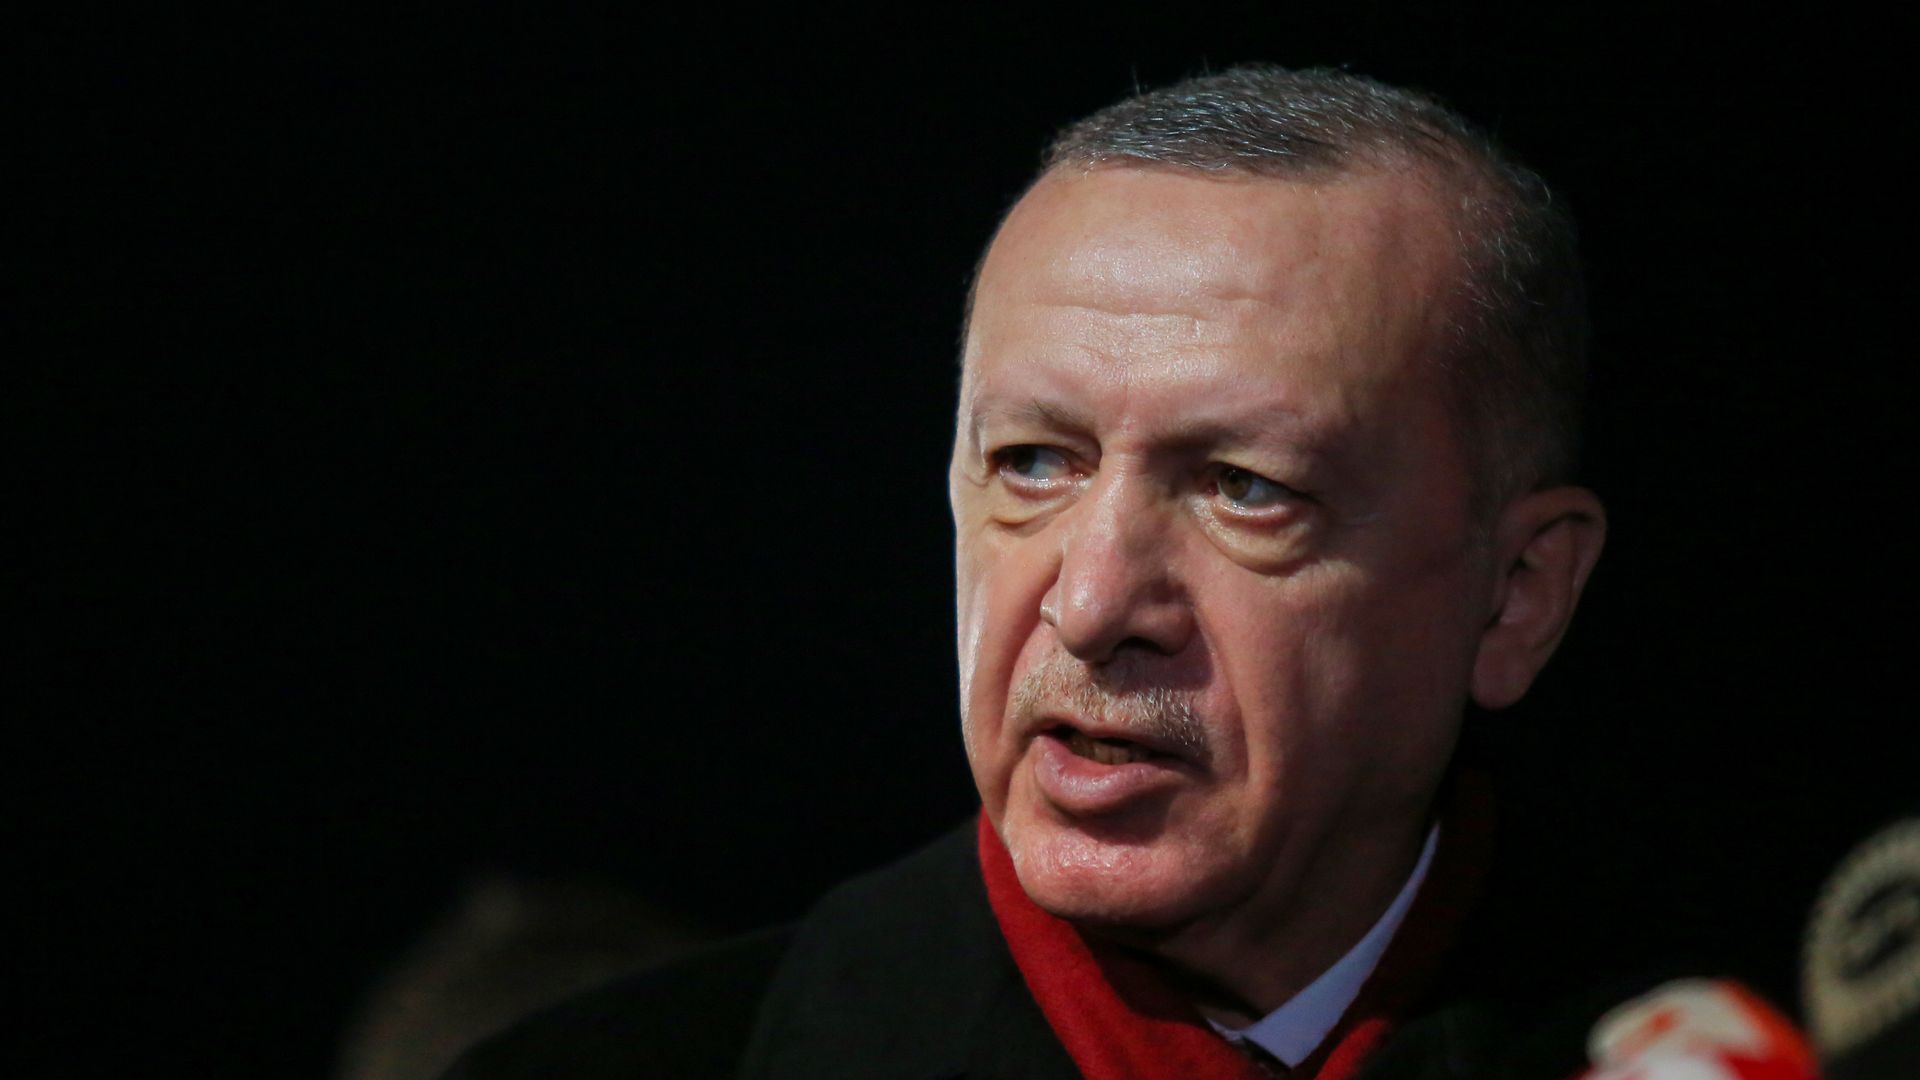 Turkey's President Recep Tayyip Erdogan speaking at a press conference in November 2020.